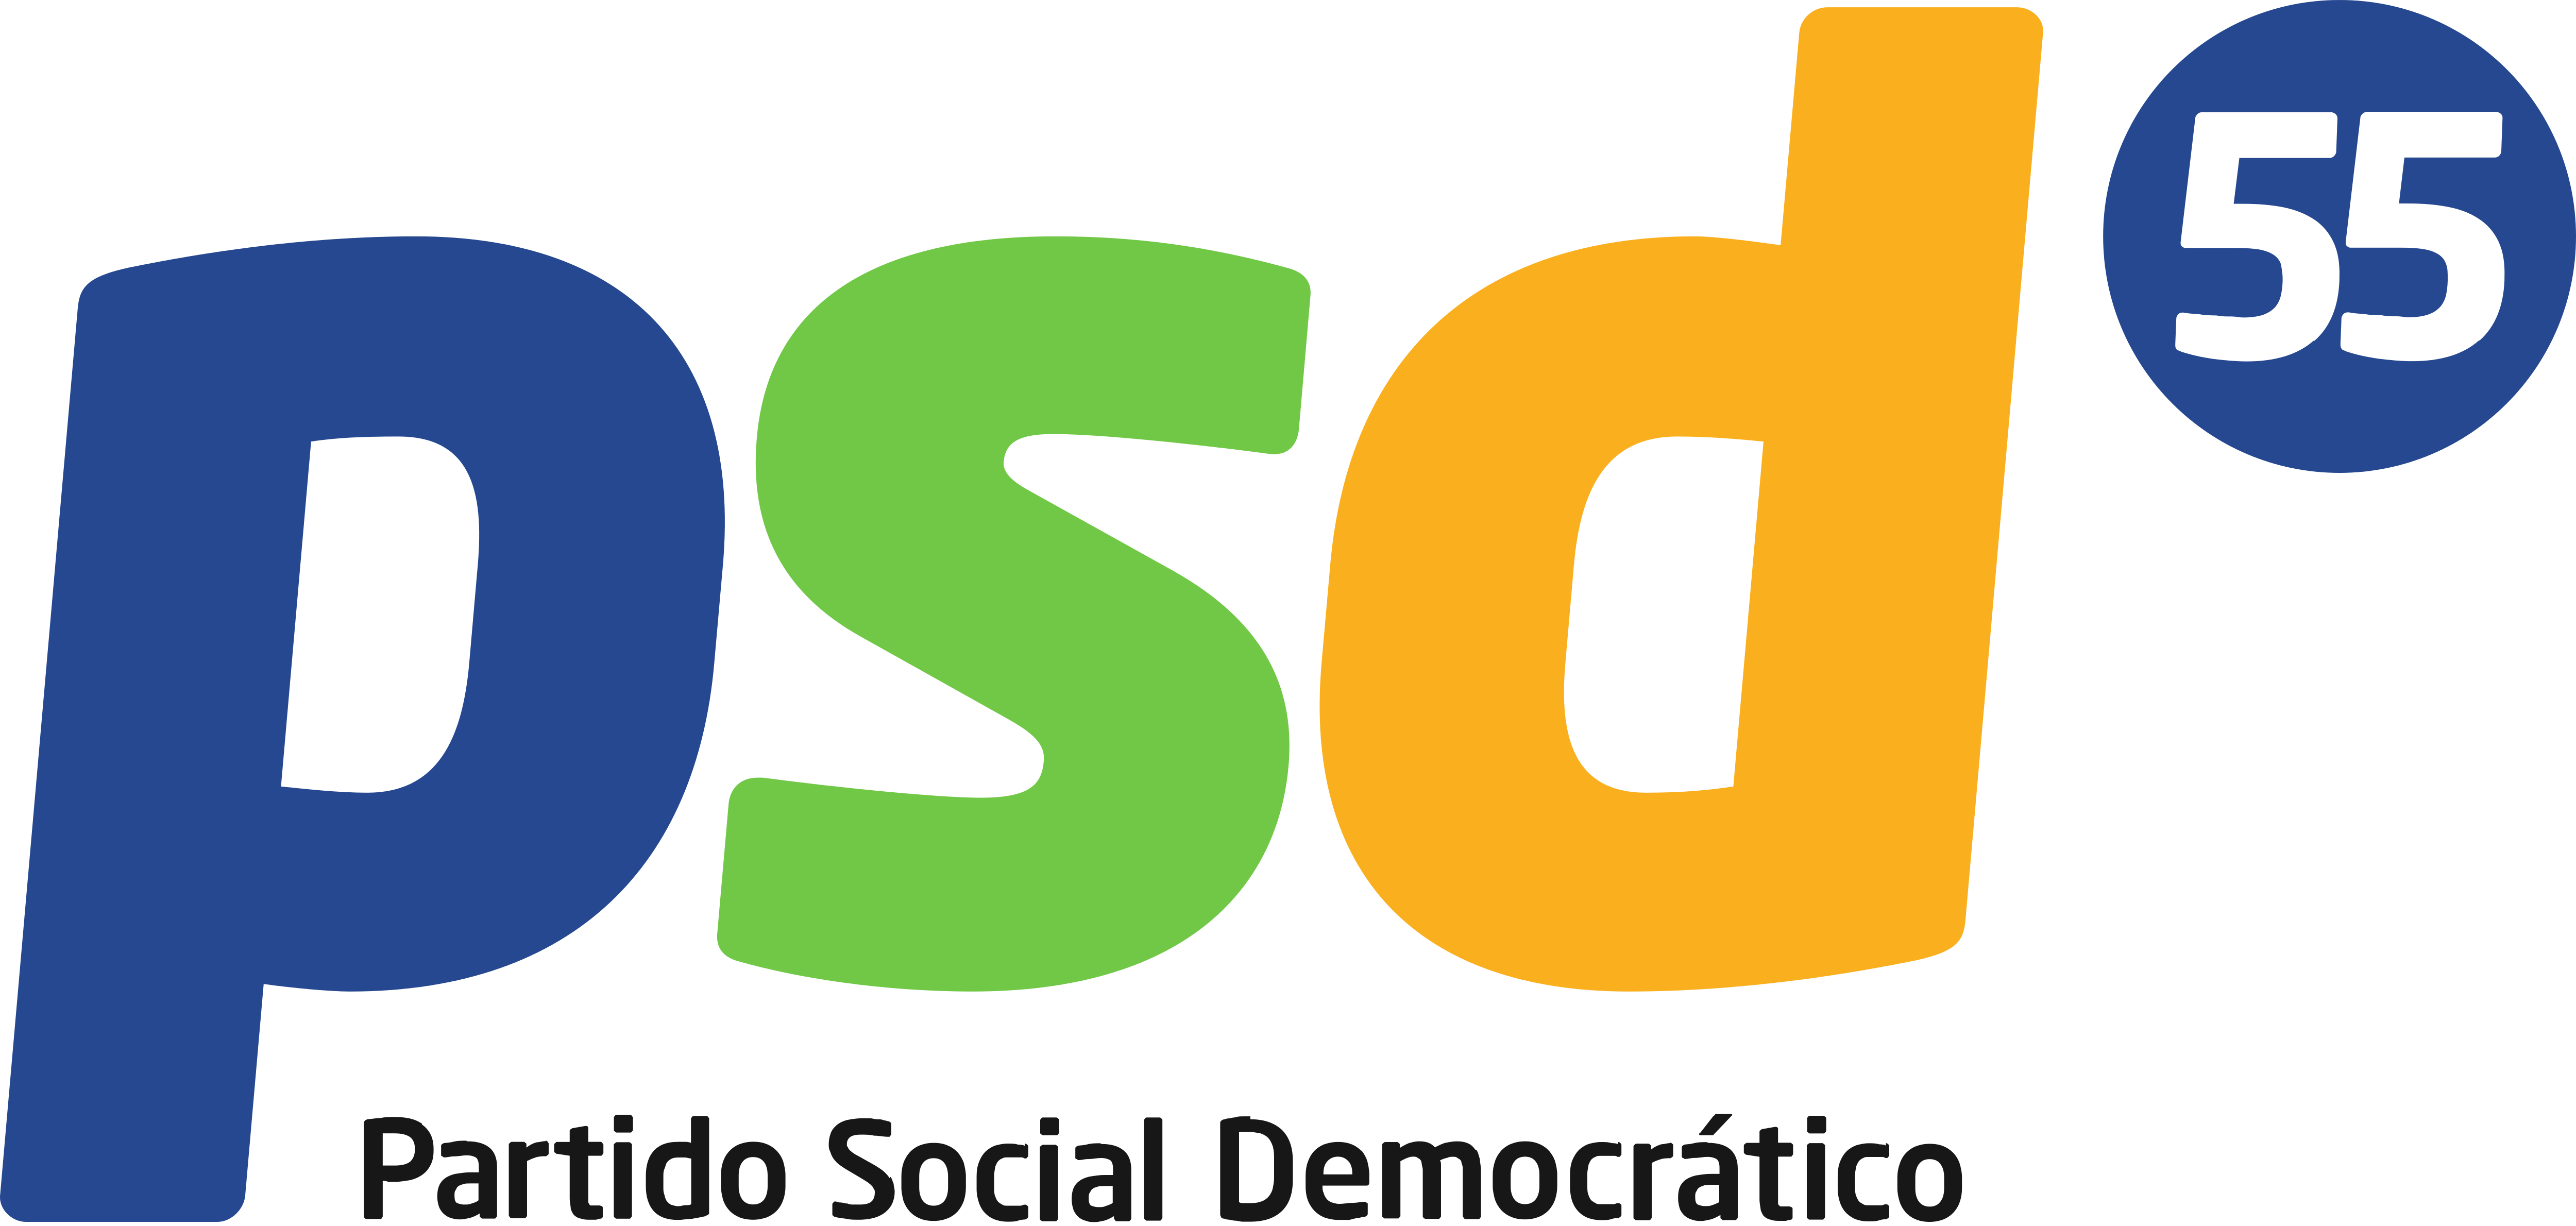 PSD Logo - Partido Social Democrático Logo.